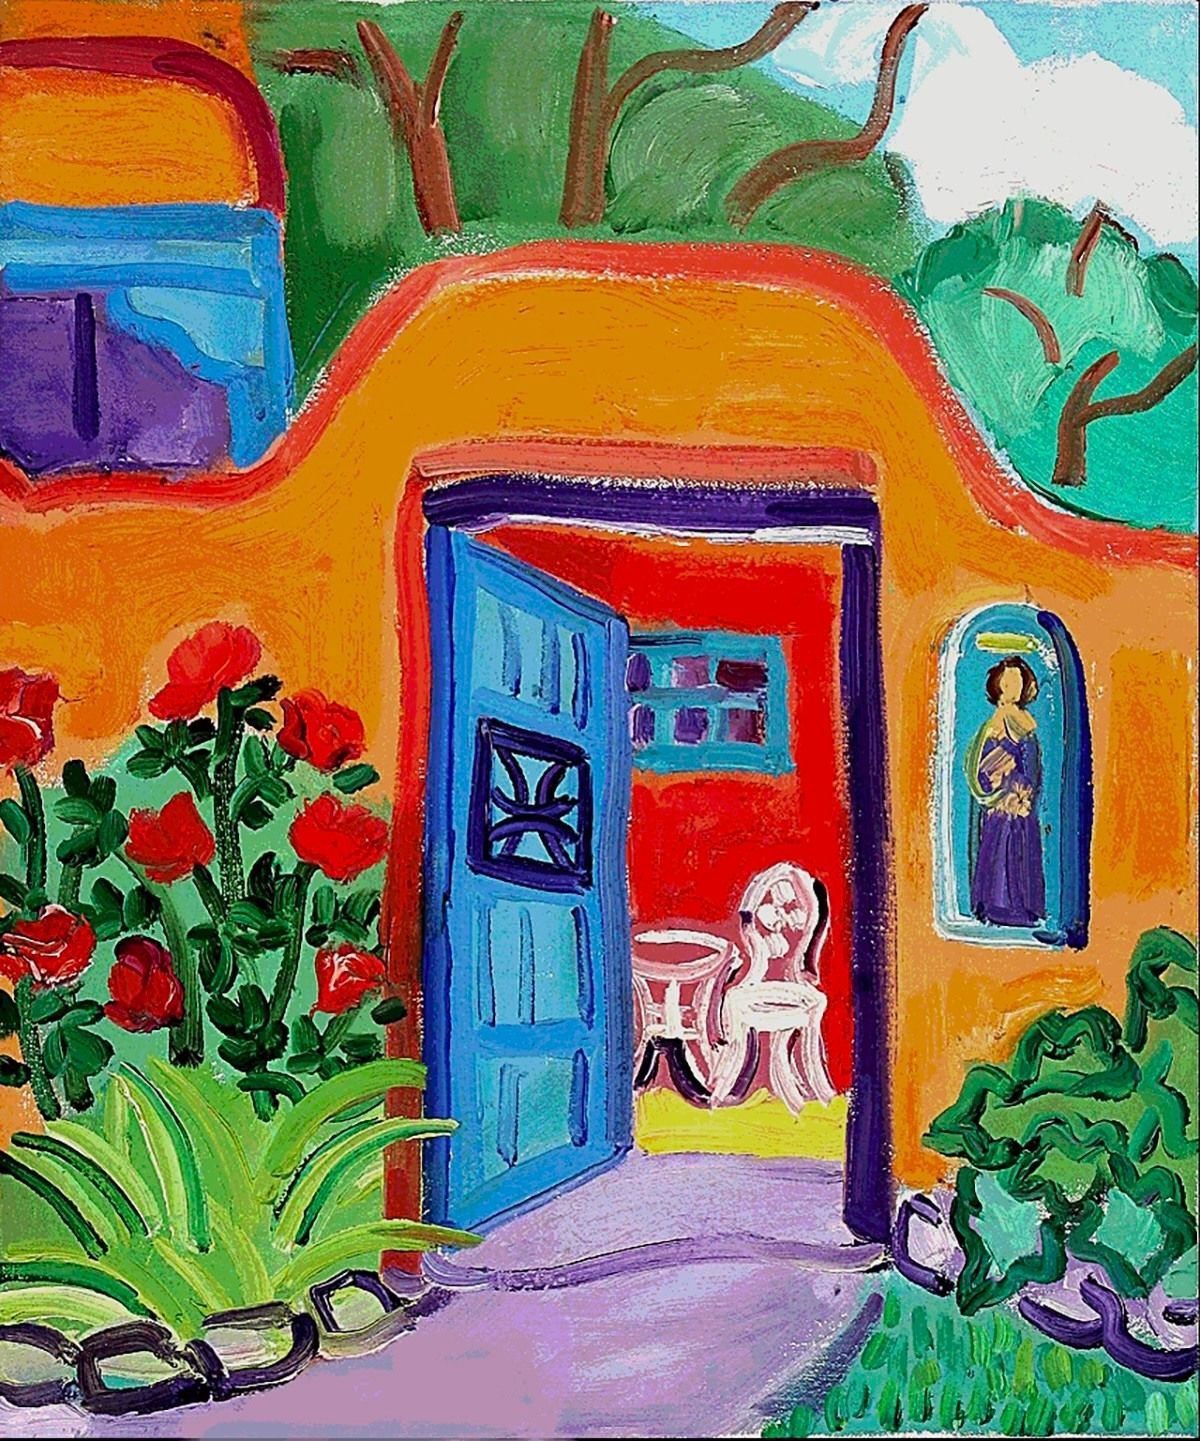 Mimosas and a Masterpiece! \u201cSummer Adobe Door" with Laura & Mickey